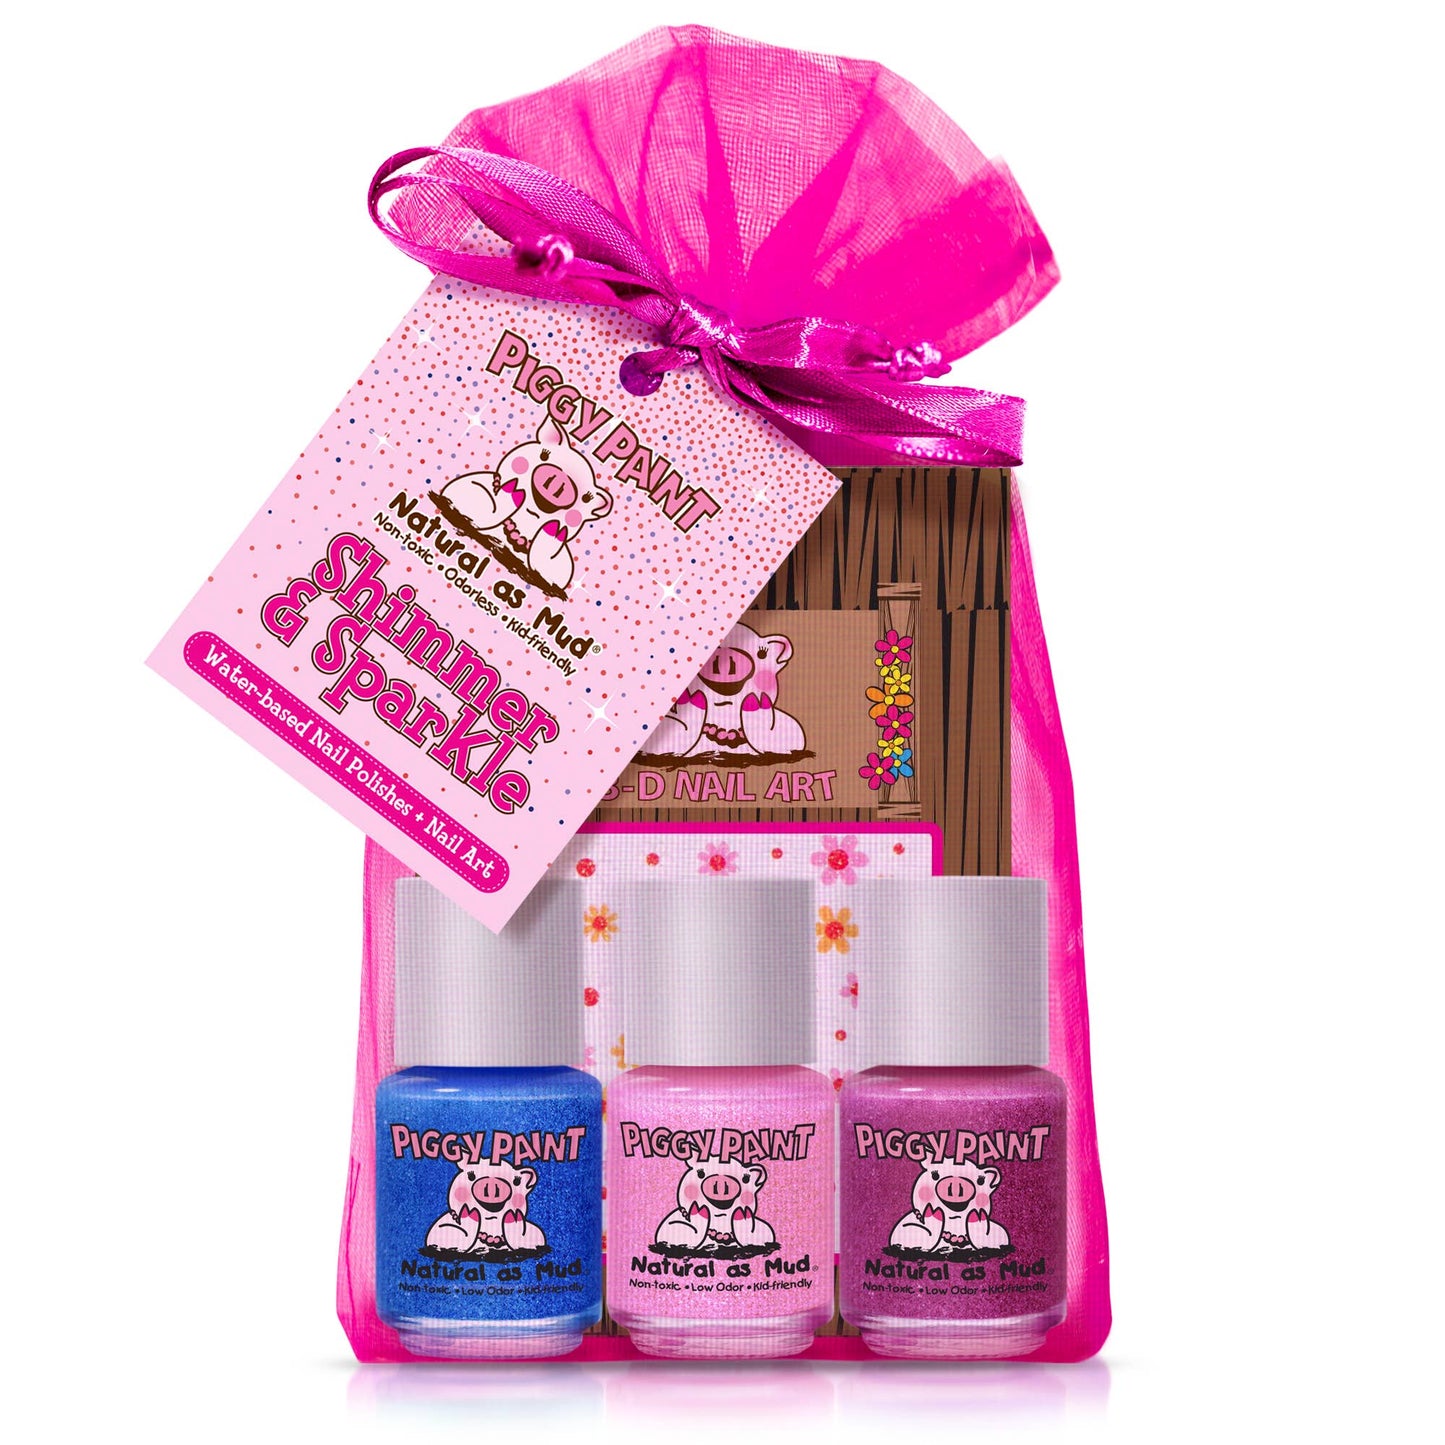 Pig Paint 3-pack polish & nail art